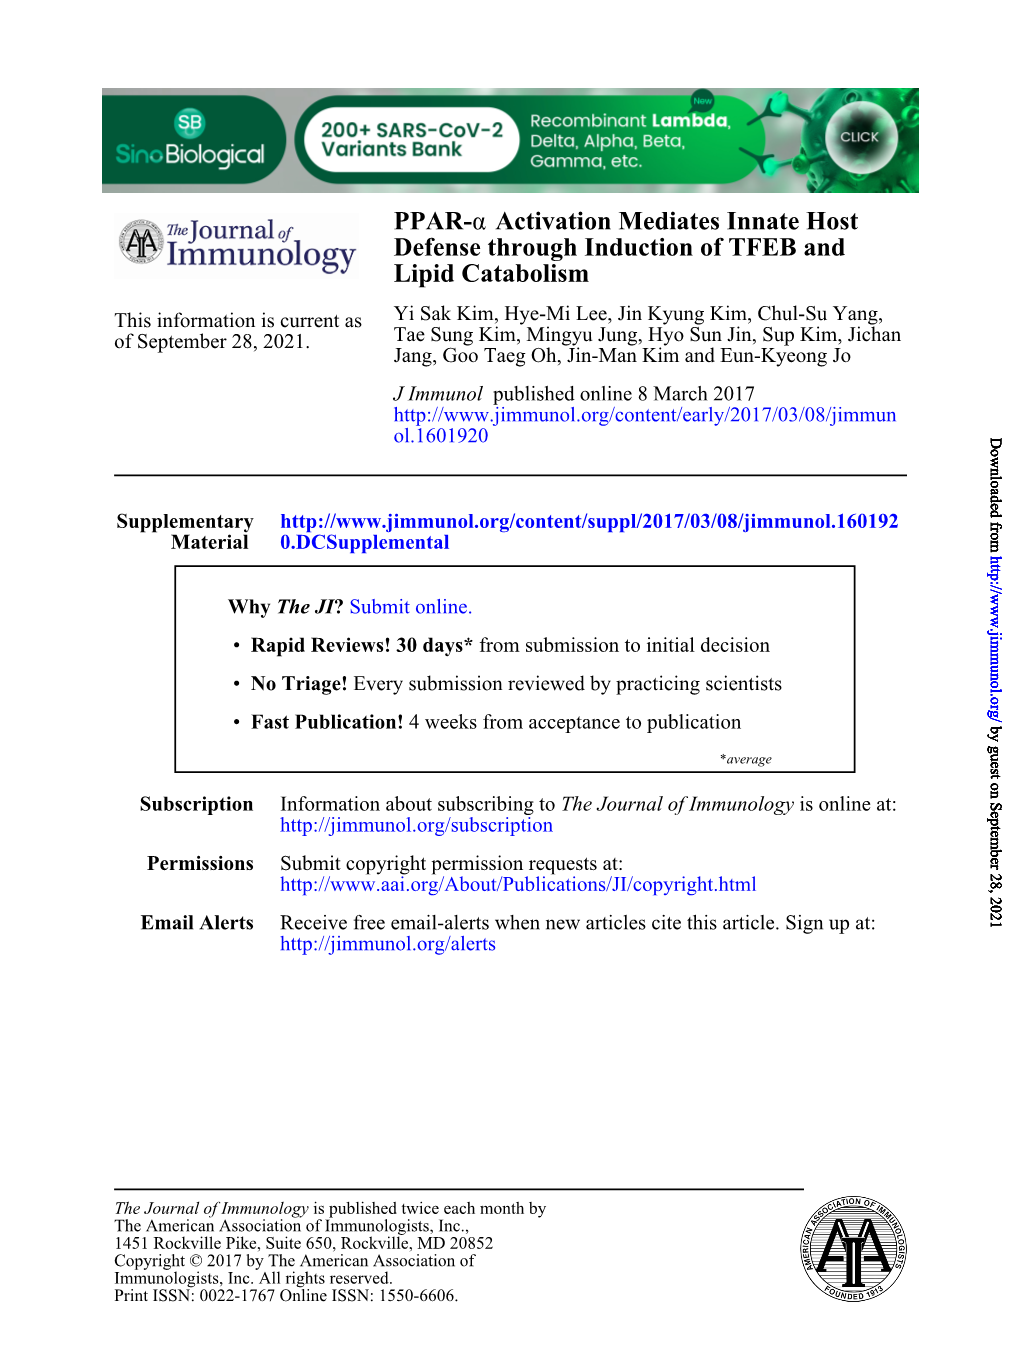 PPAR-Α Activation Mediates Innate Host Defense Through Induction of TFEB and Lipid Catabolism